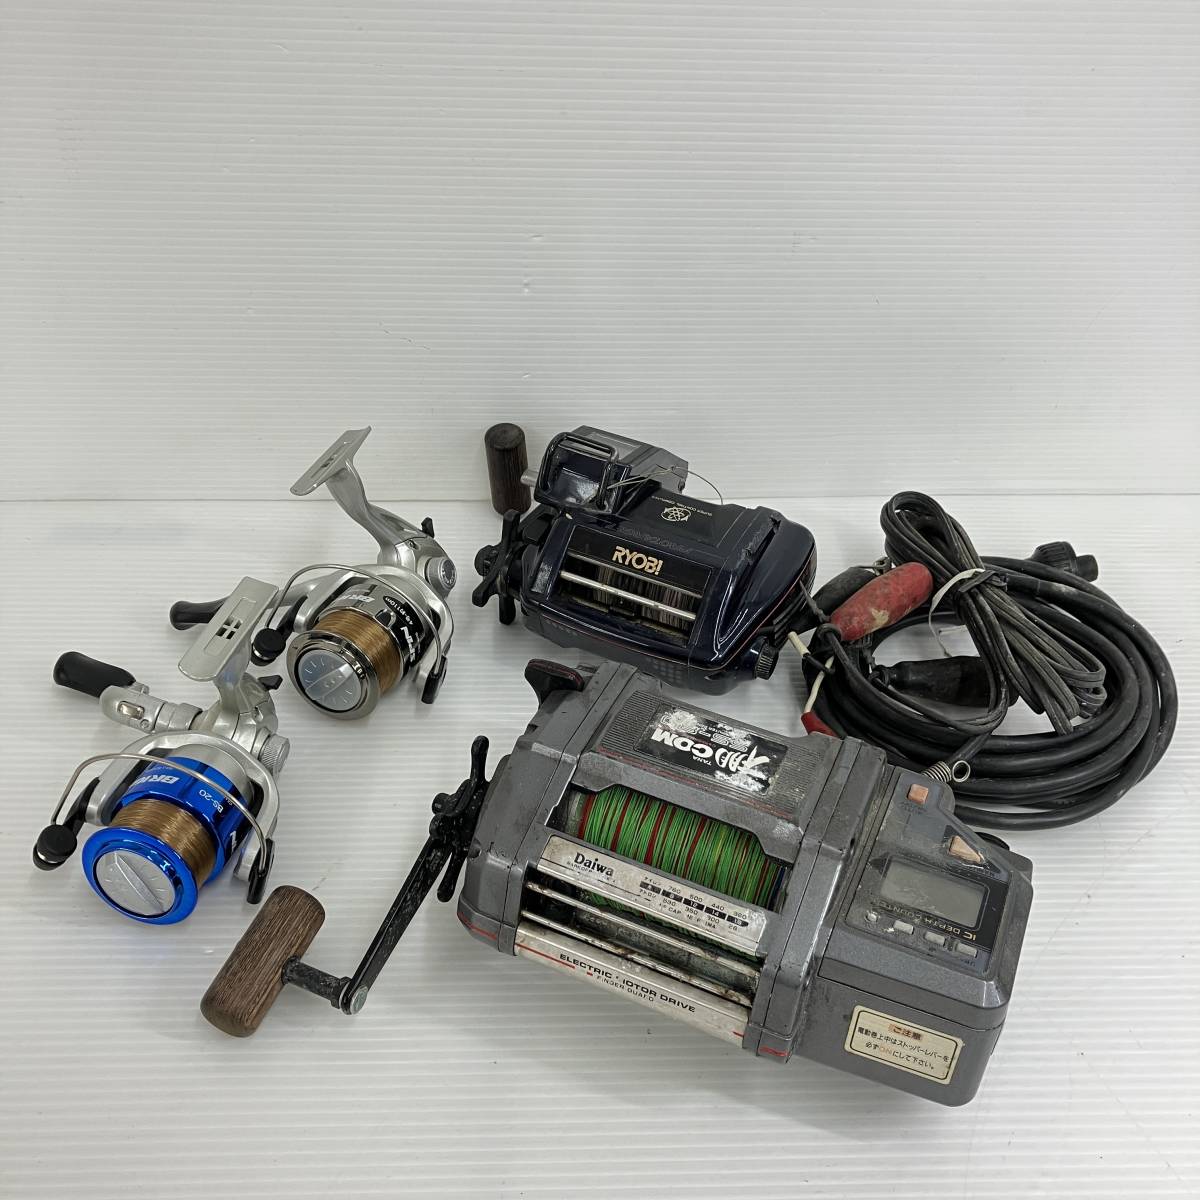 231046-009 Daiwa Daiwa electric reel shelves COM SS-80/RYOBI Ryobi AD electric  80 etc. fishing gear . summarize : Real Yahoo auction salling